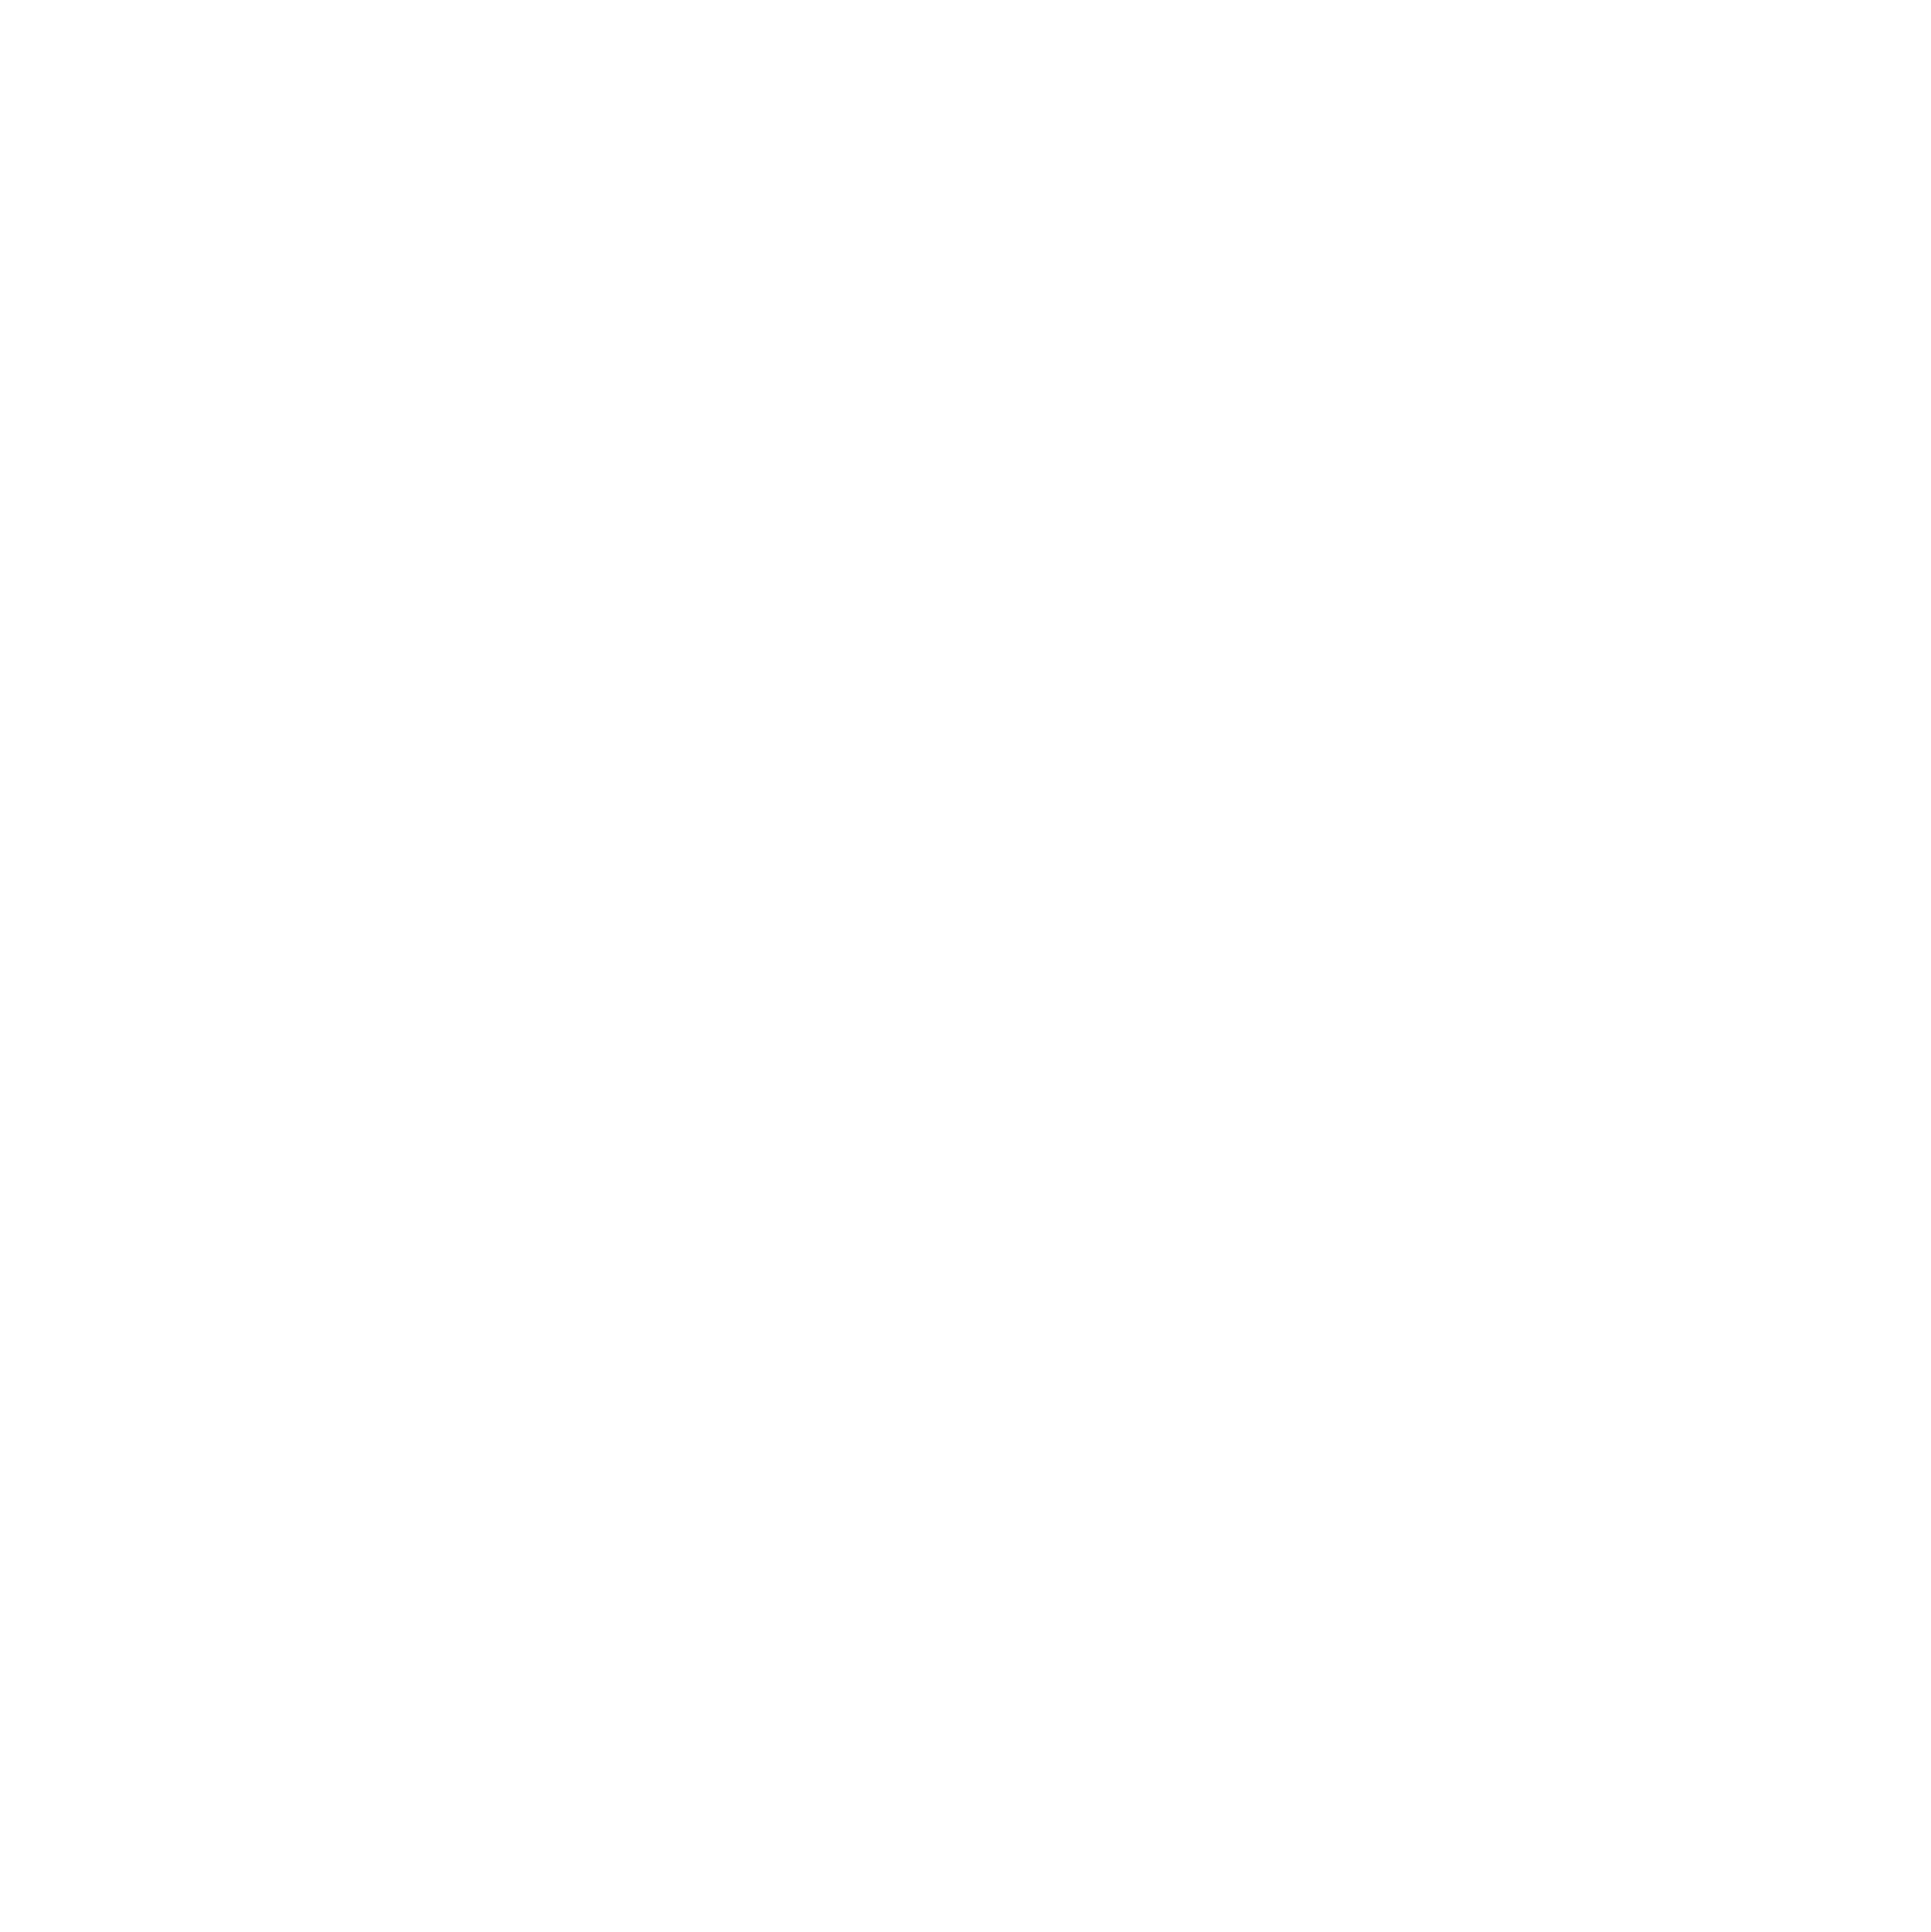 Cape Byron Property